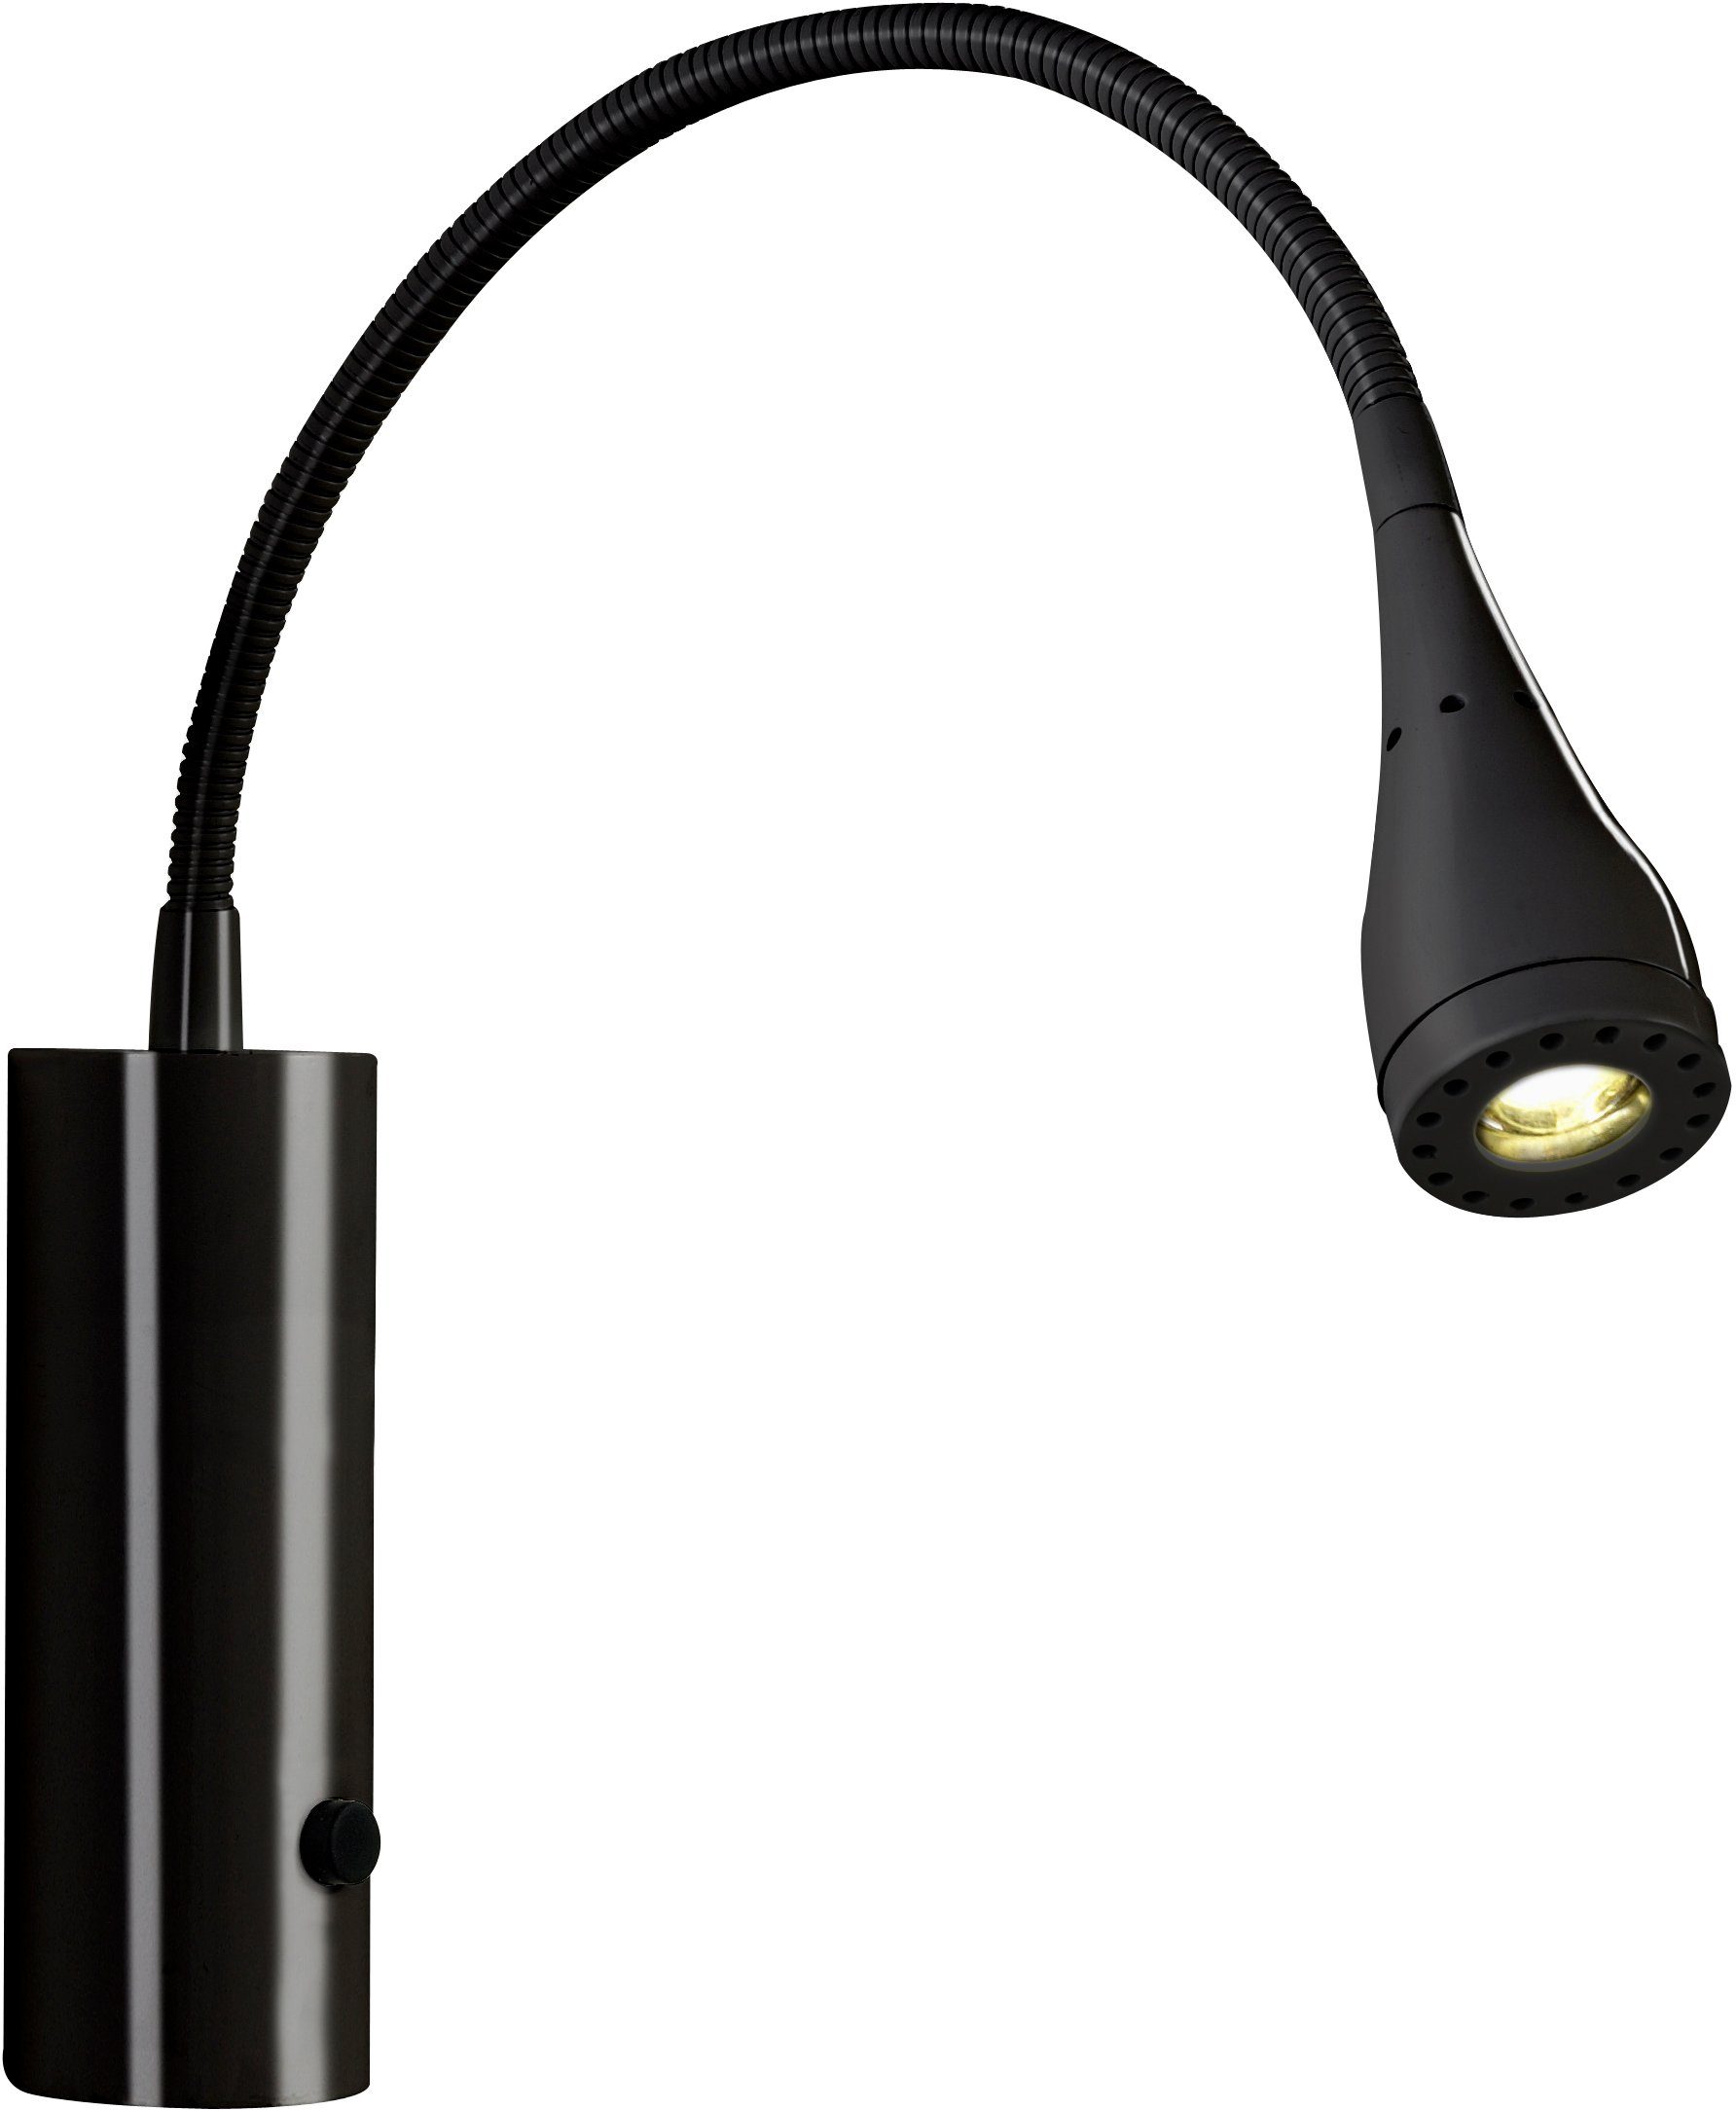 Nordlux LED Leselampe Mento, LED fest integriert, Warmweiß | Leselampen